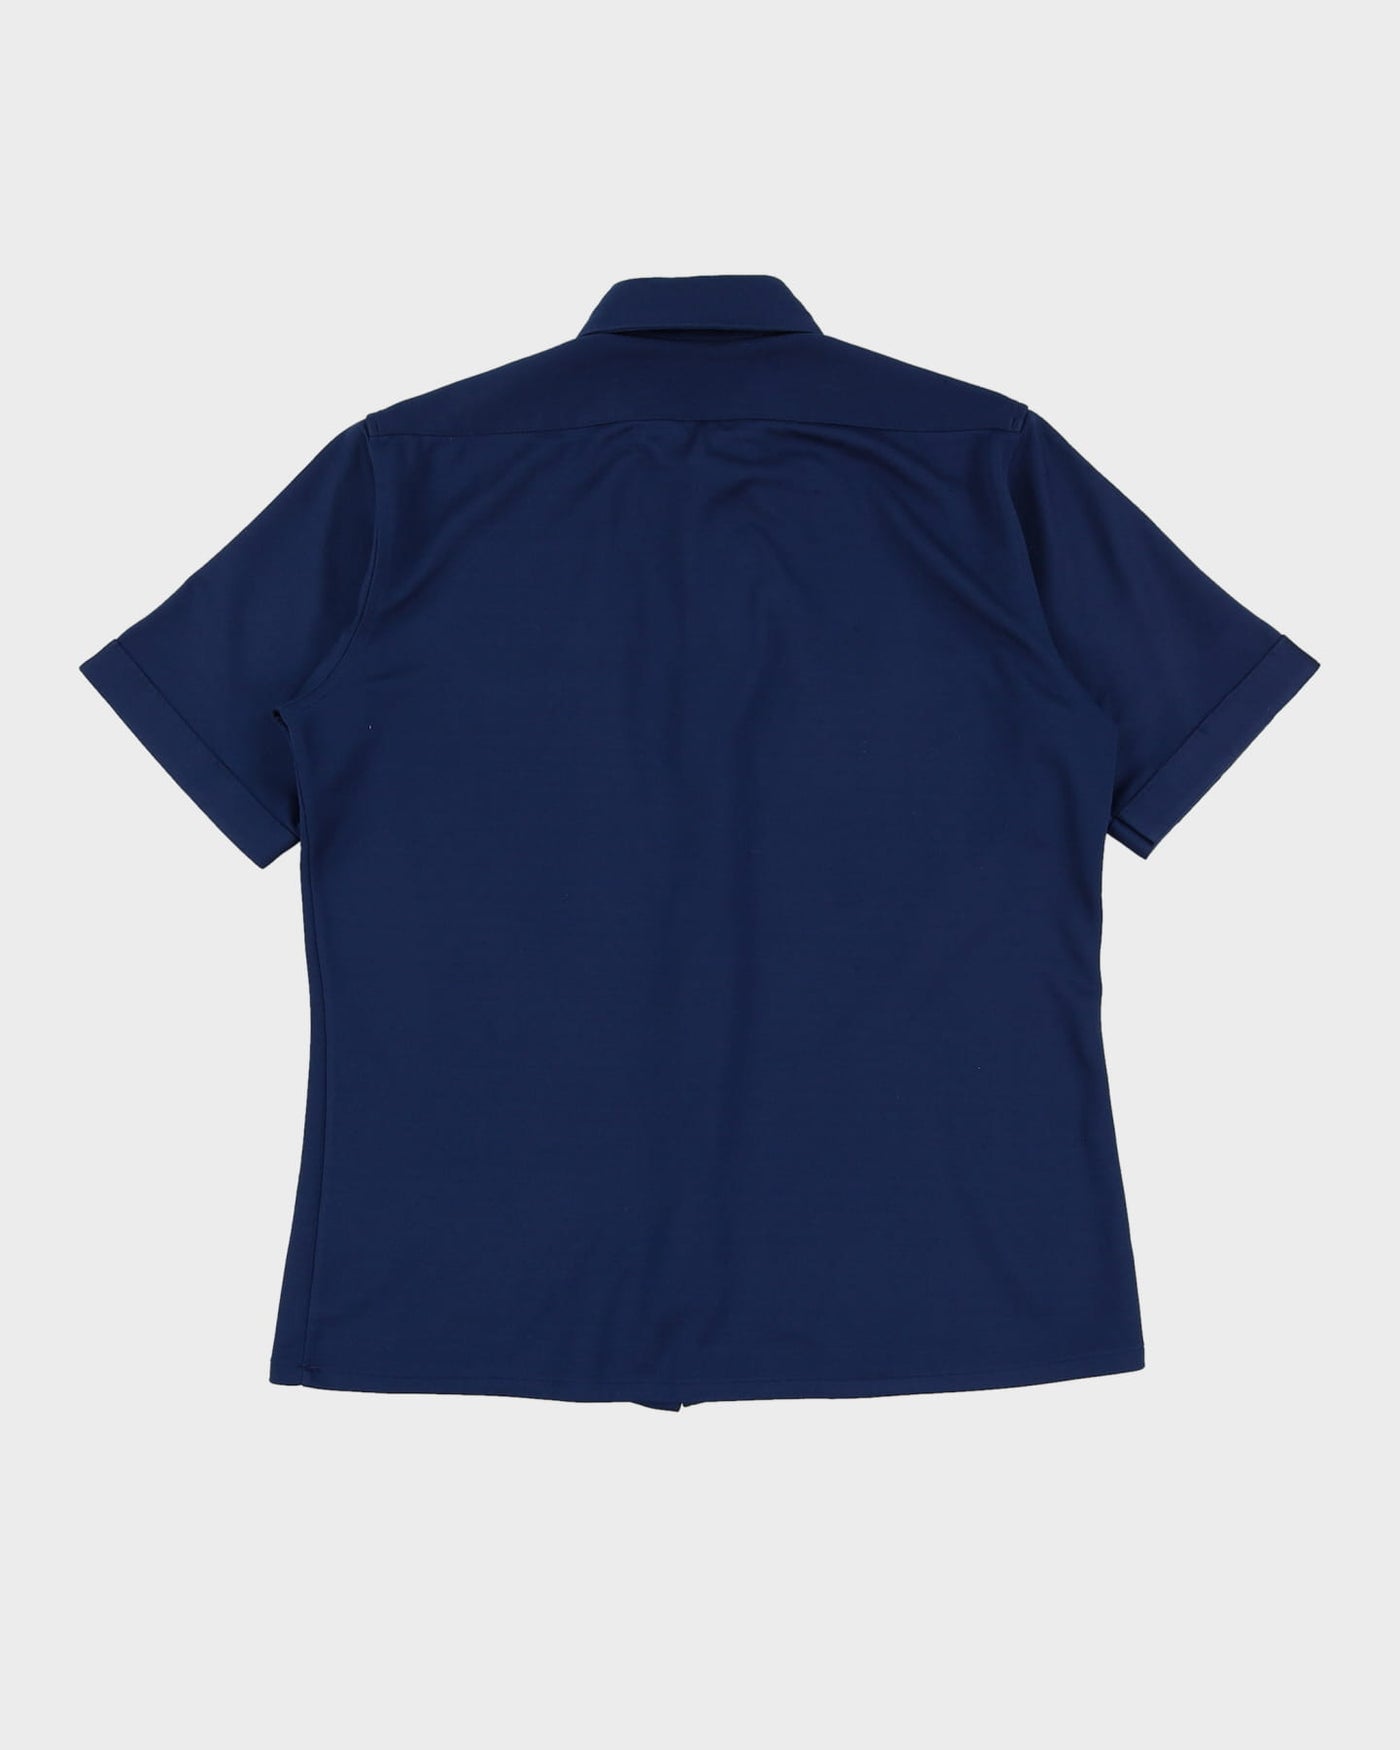 Vintage 70s JC Penney Navy Short-Sleeve Work Shirt - XL